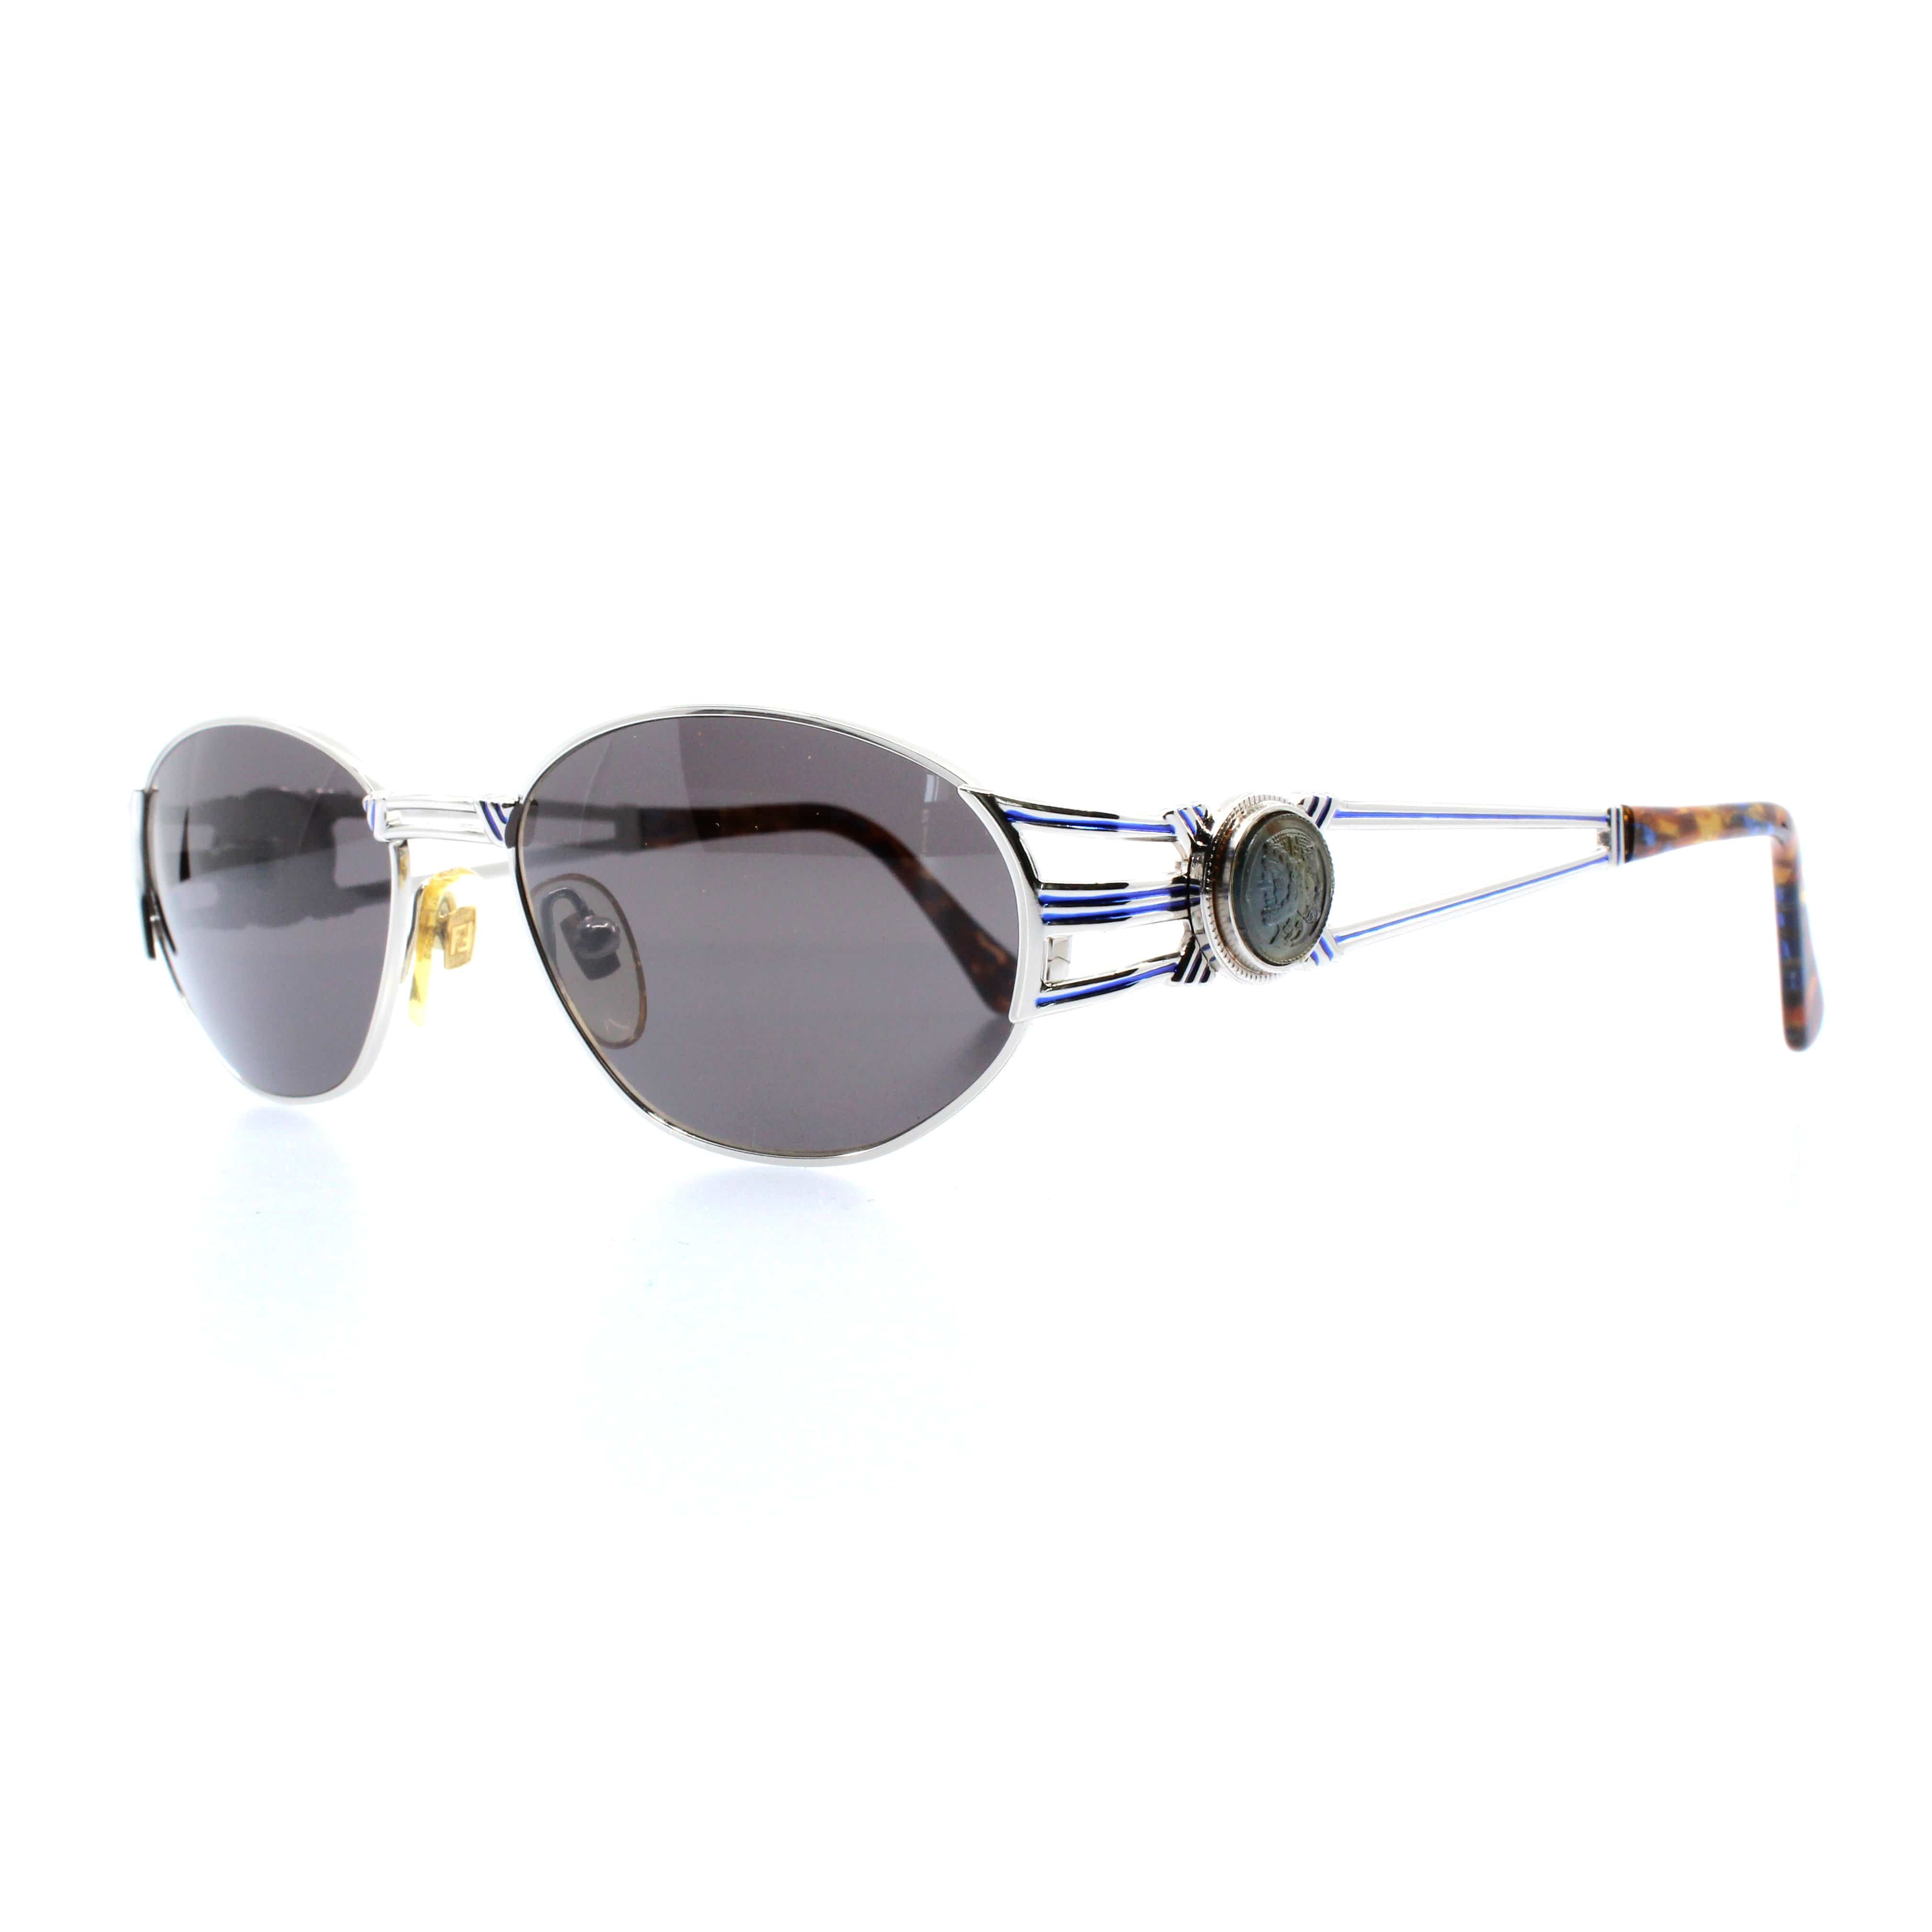 Original Vintage Sunglasses - Naples, Italy - Sunglasses & Eyewear Store,  Brand | Facebook